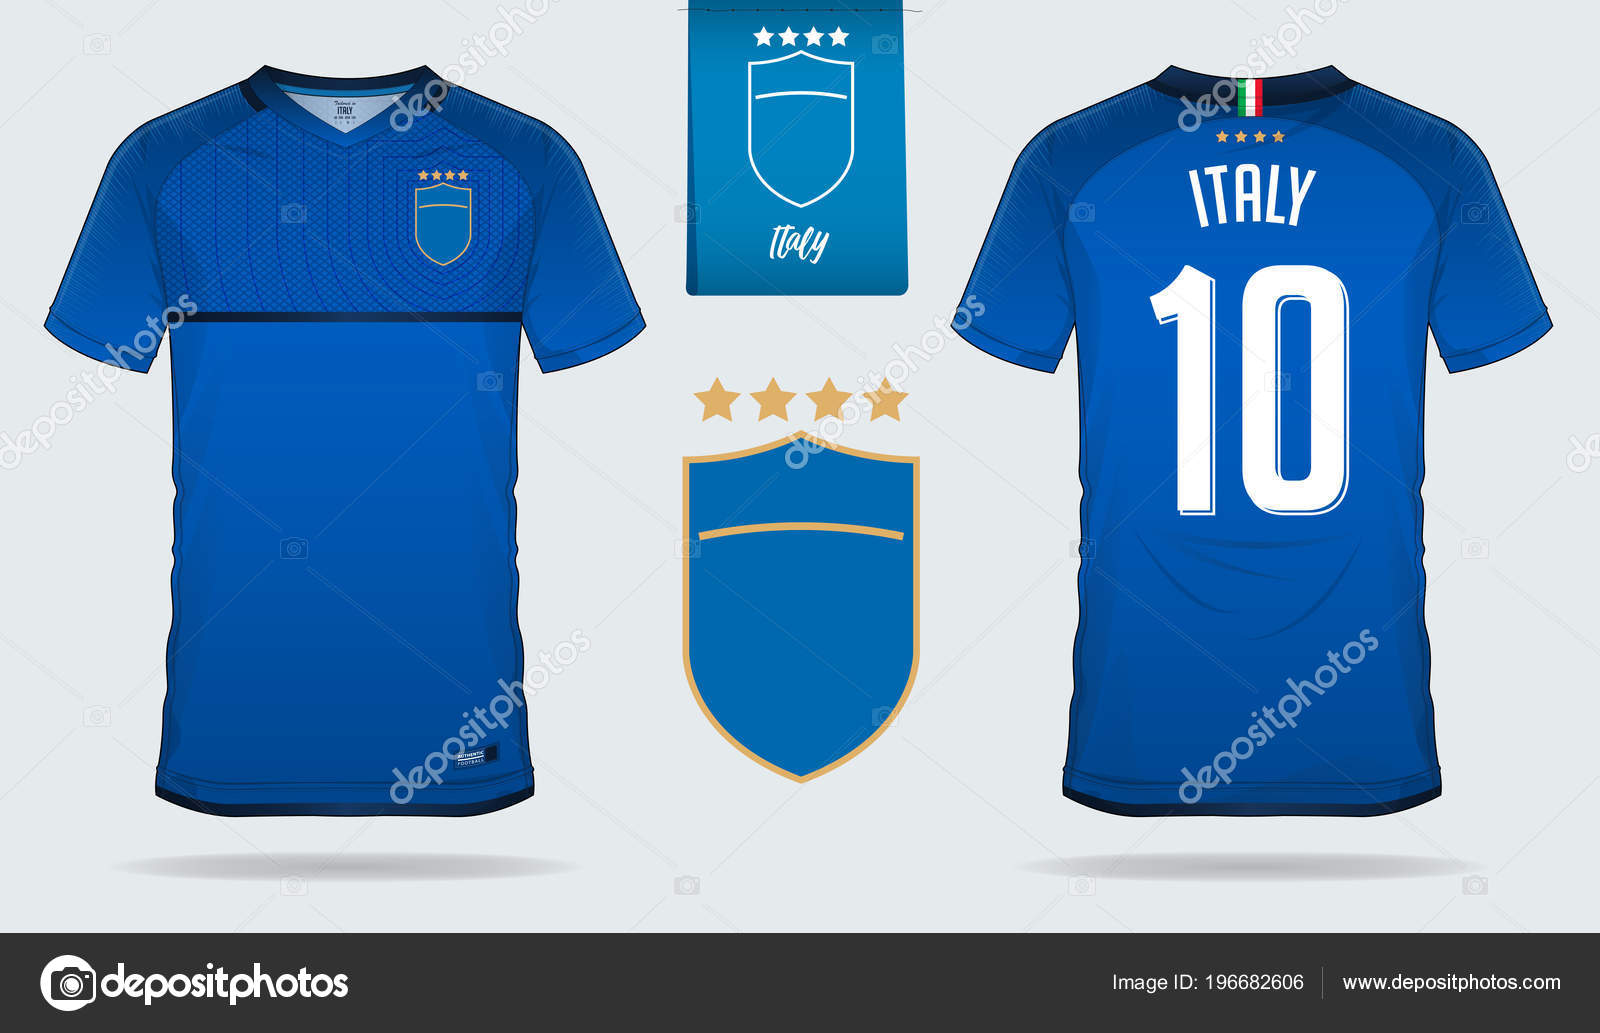 italy national football team jersey